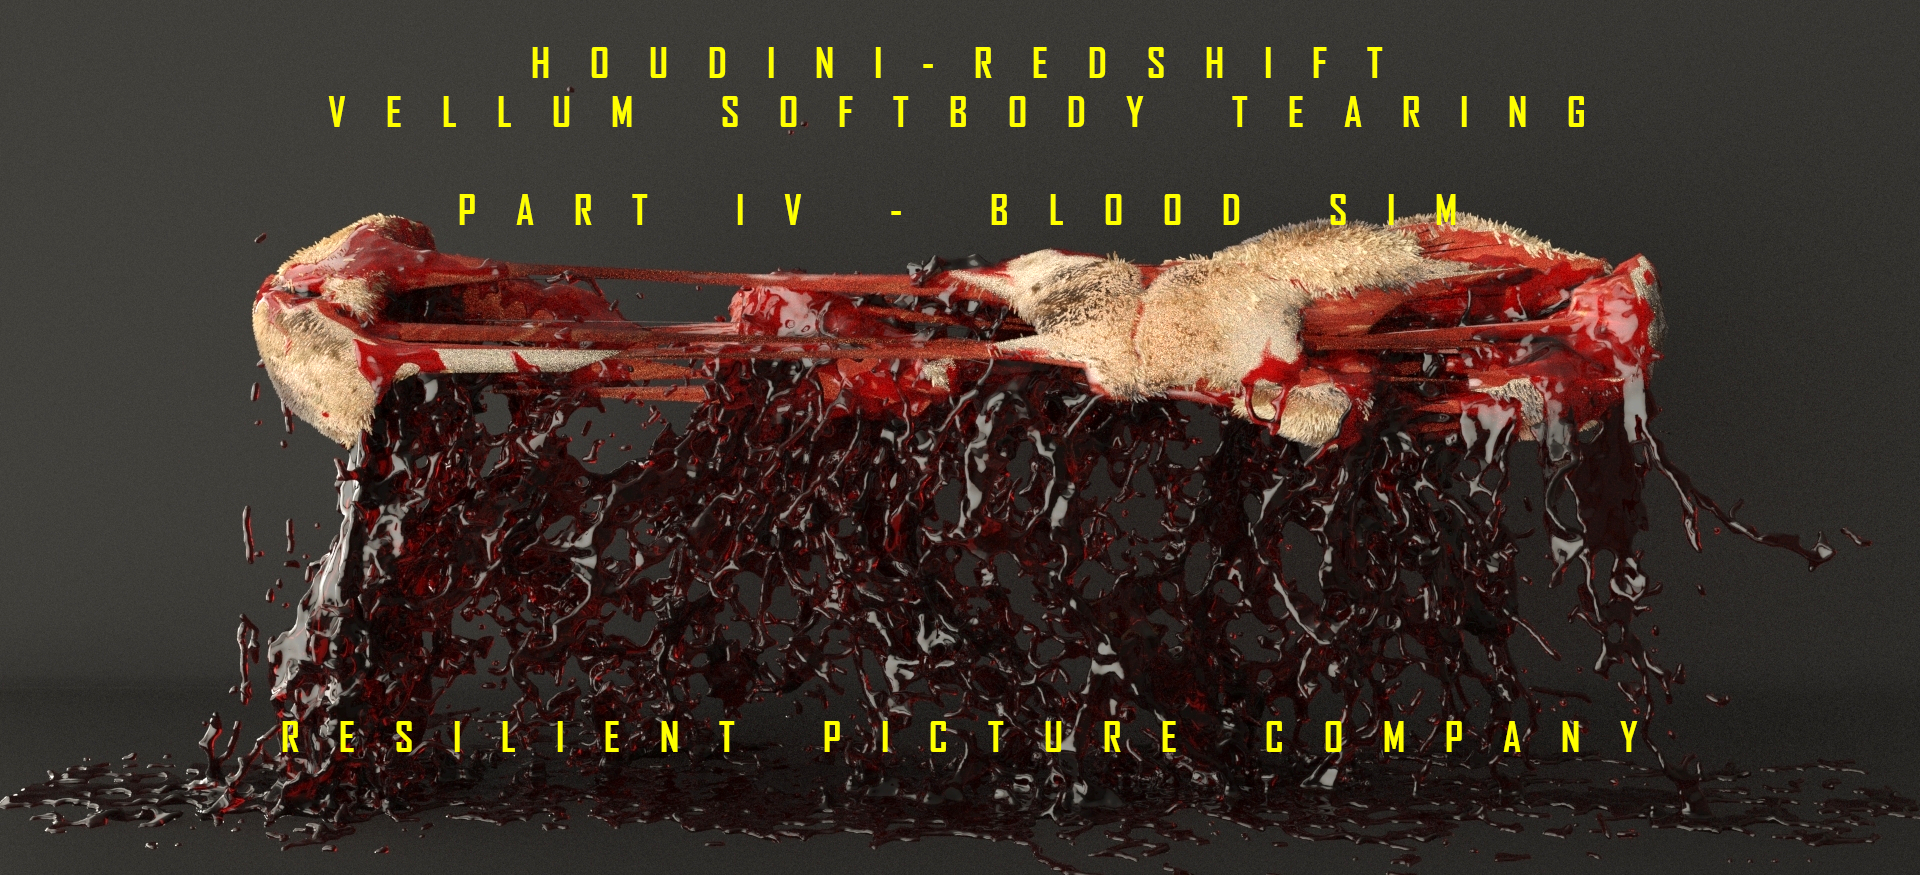 PART IV - BLOOD SIM